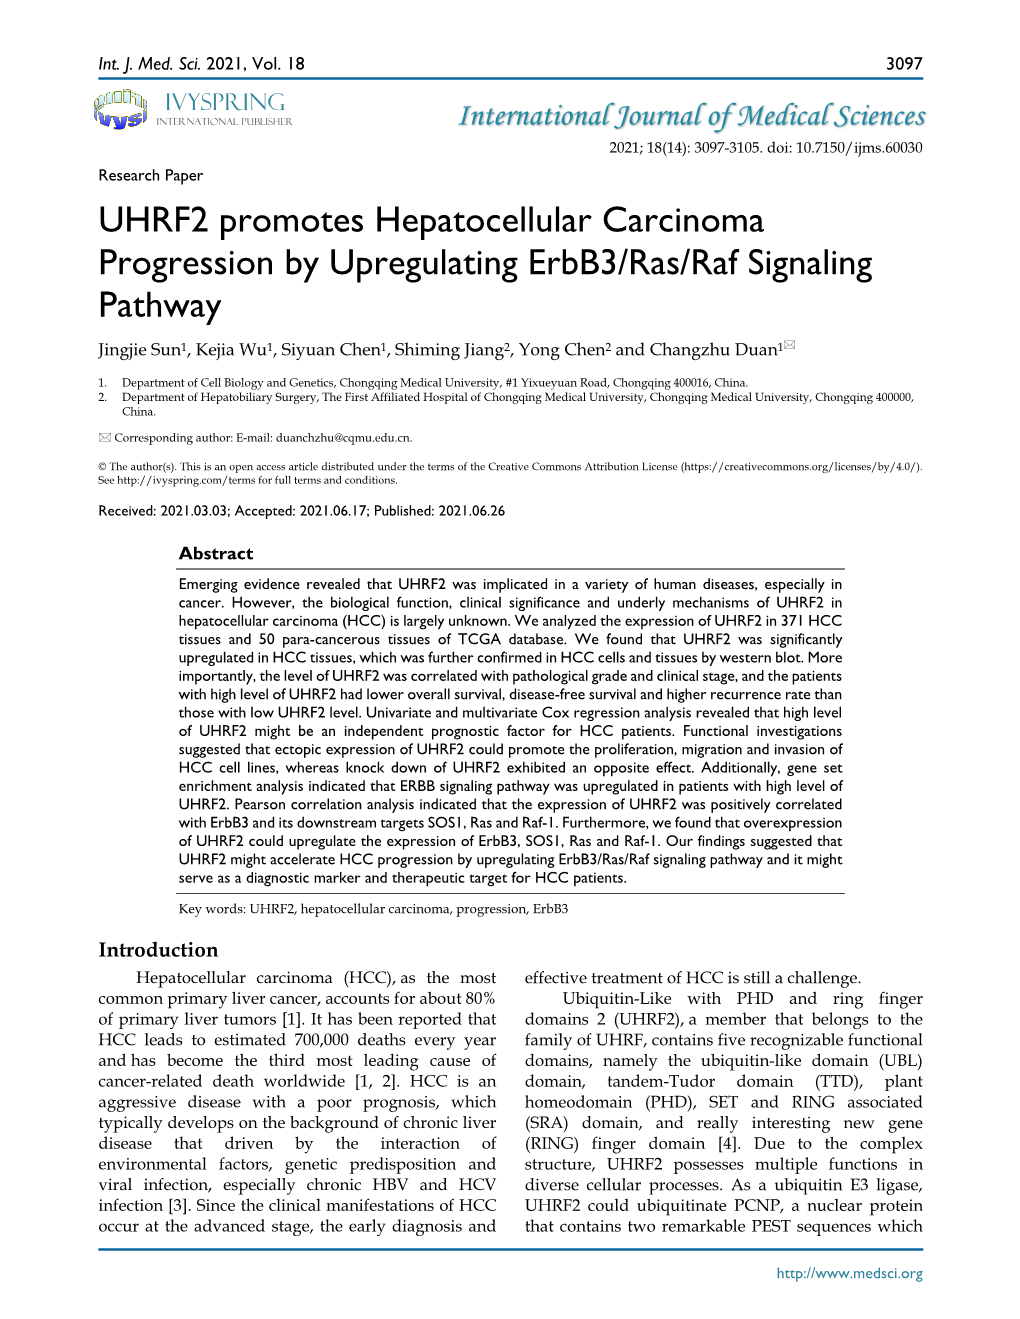 UHRF2 Promotes Hepatocellular Carcinoma Progression By